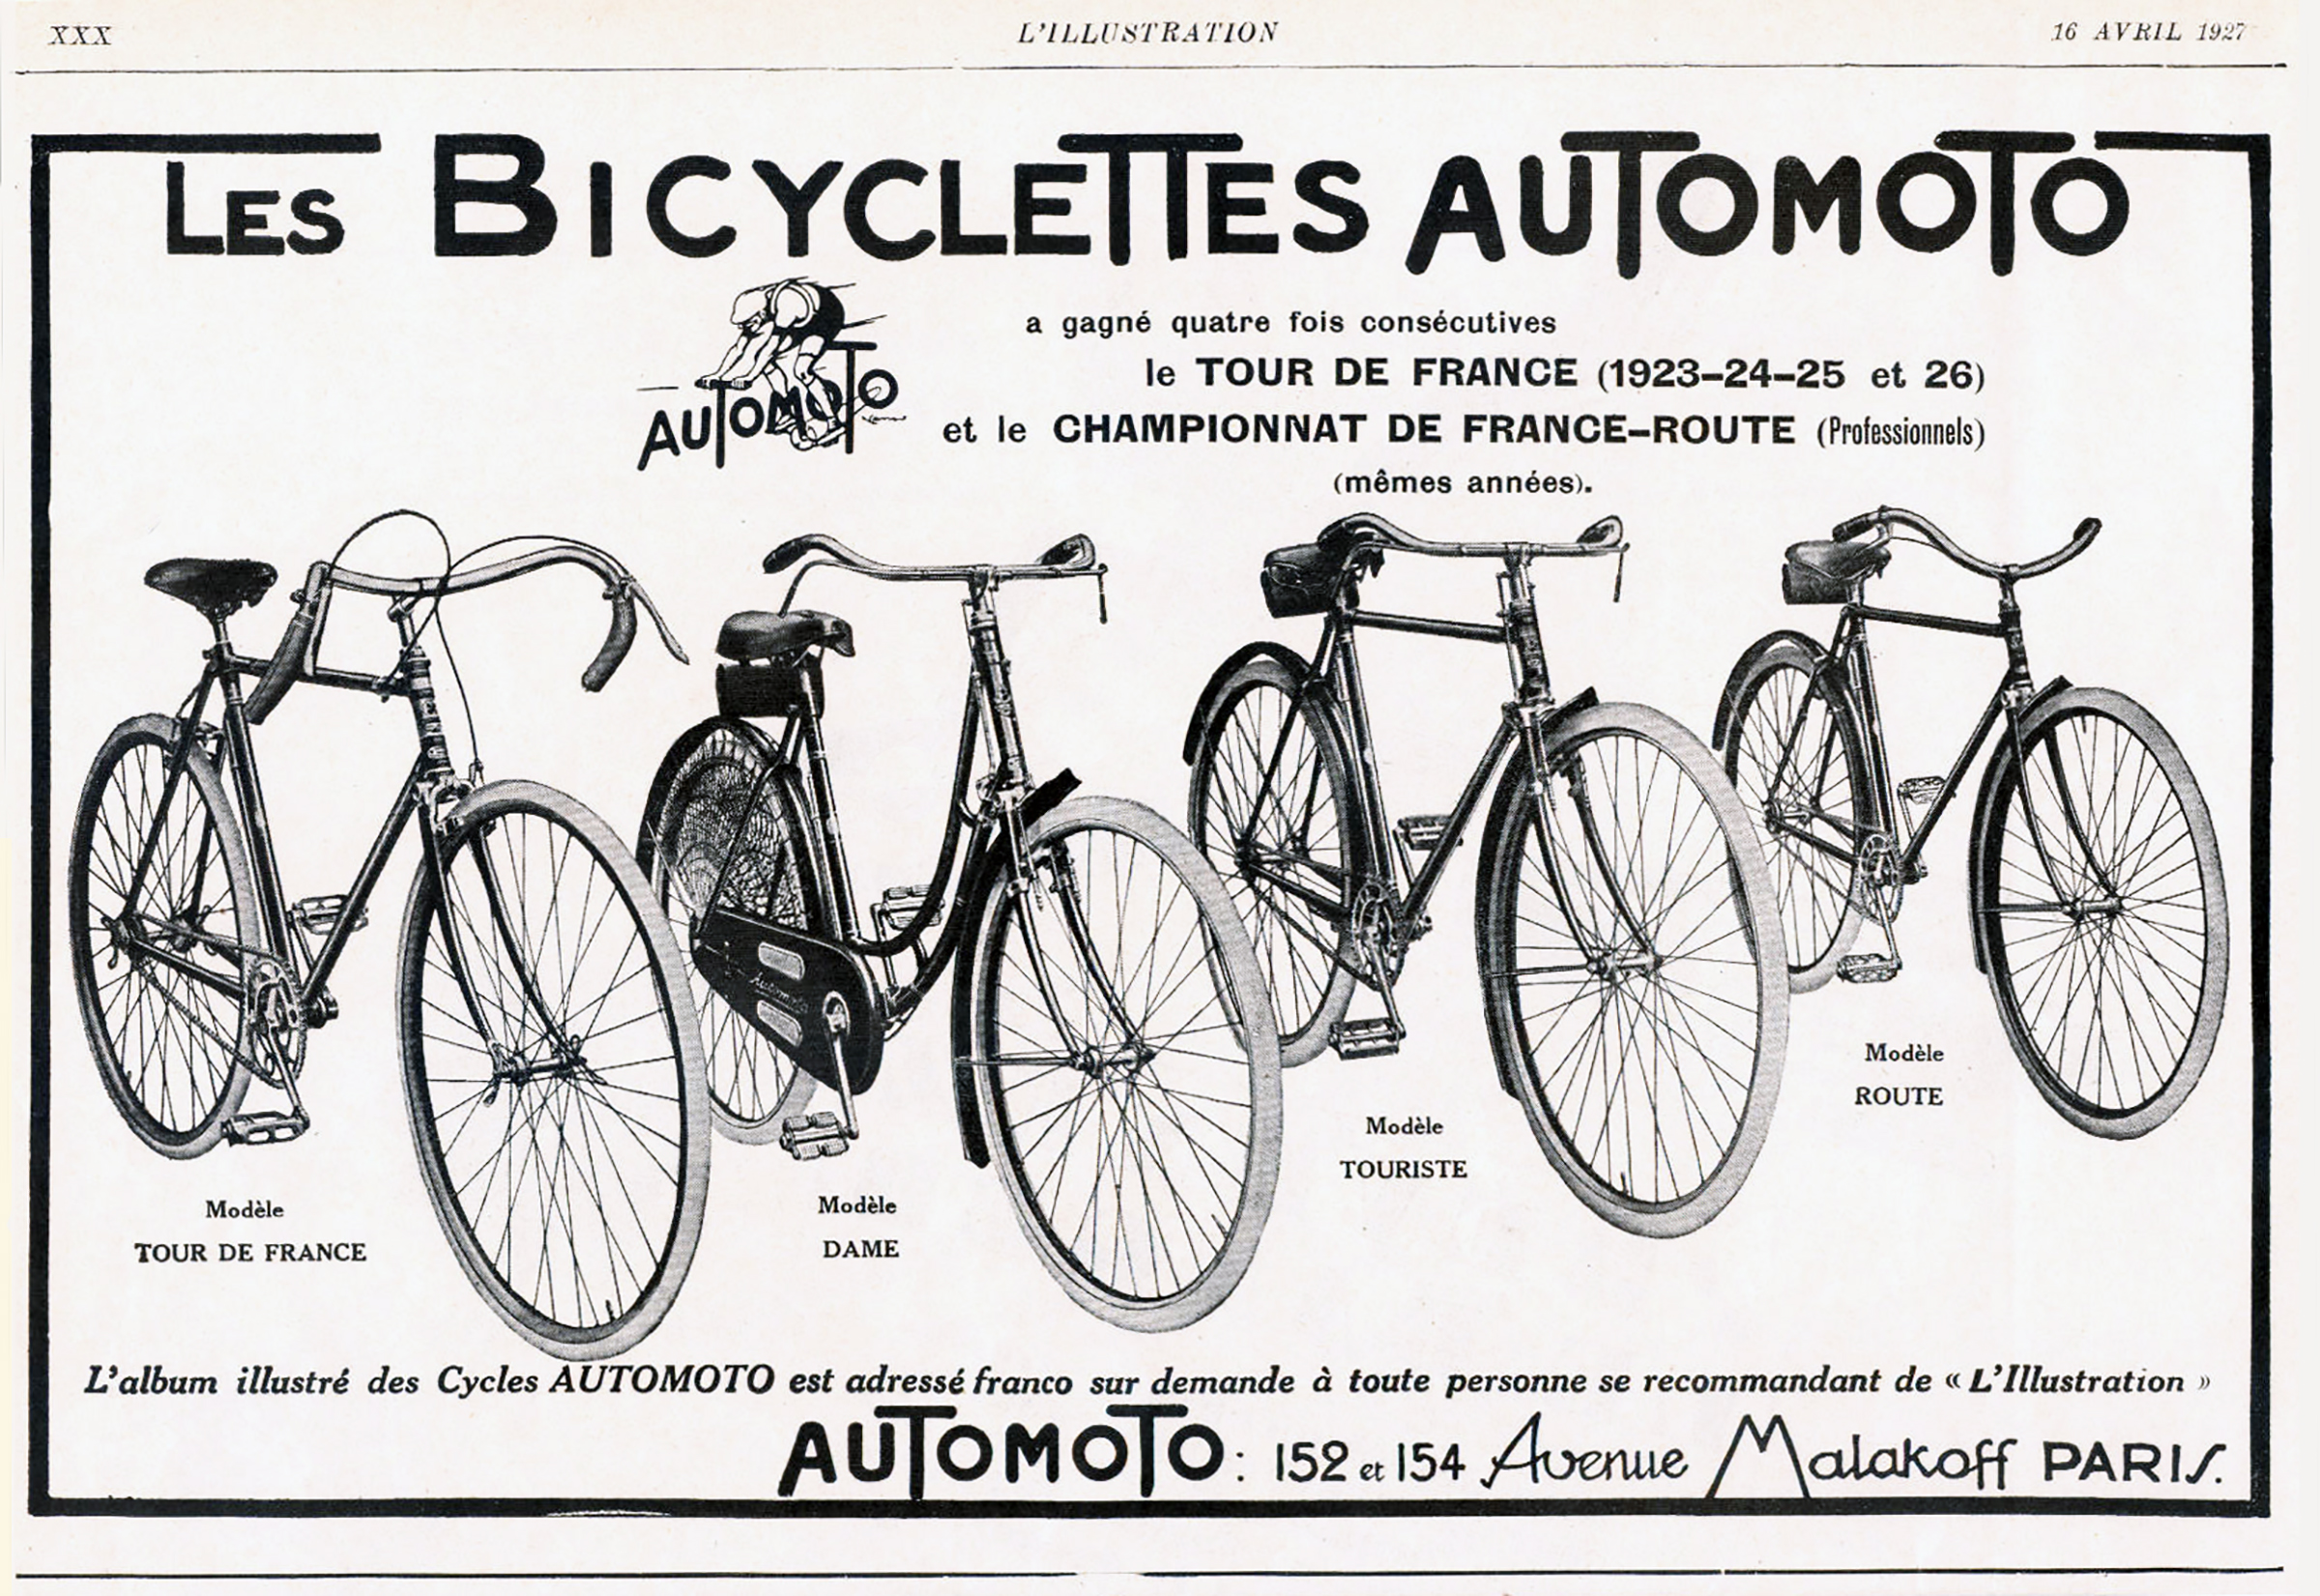 ebykr-automoto-advertisement-l'illustration-16-april-1927